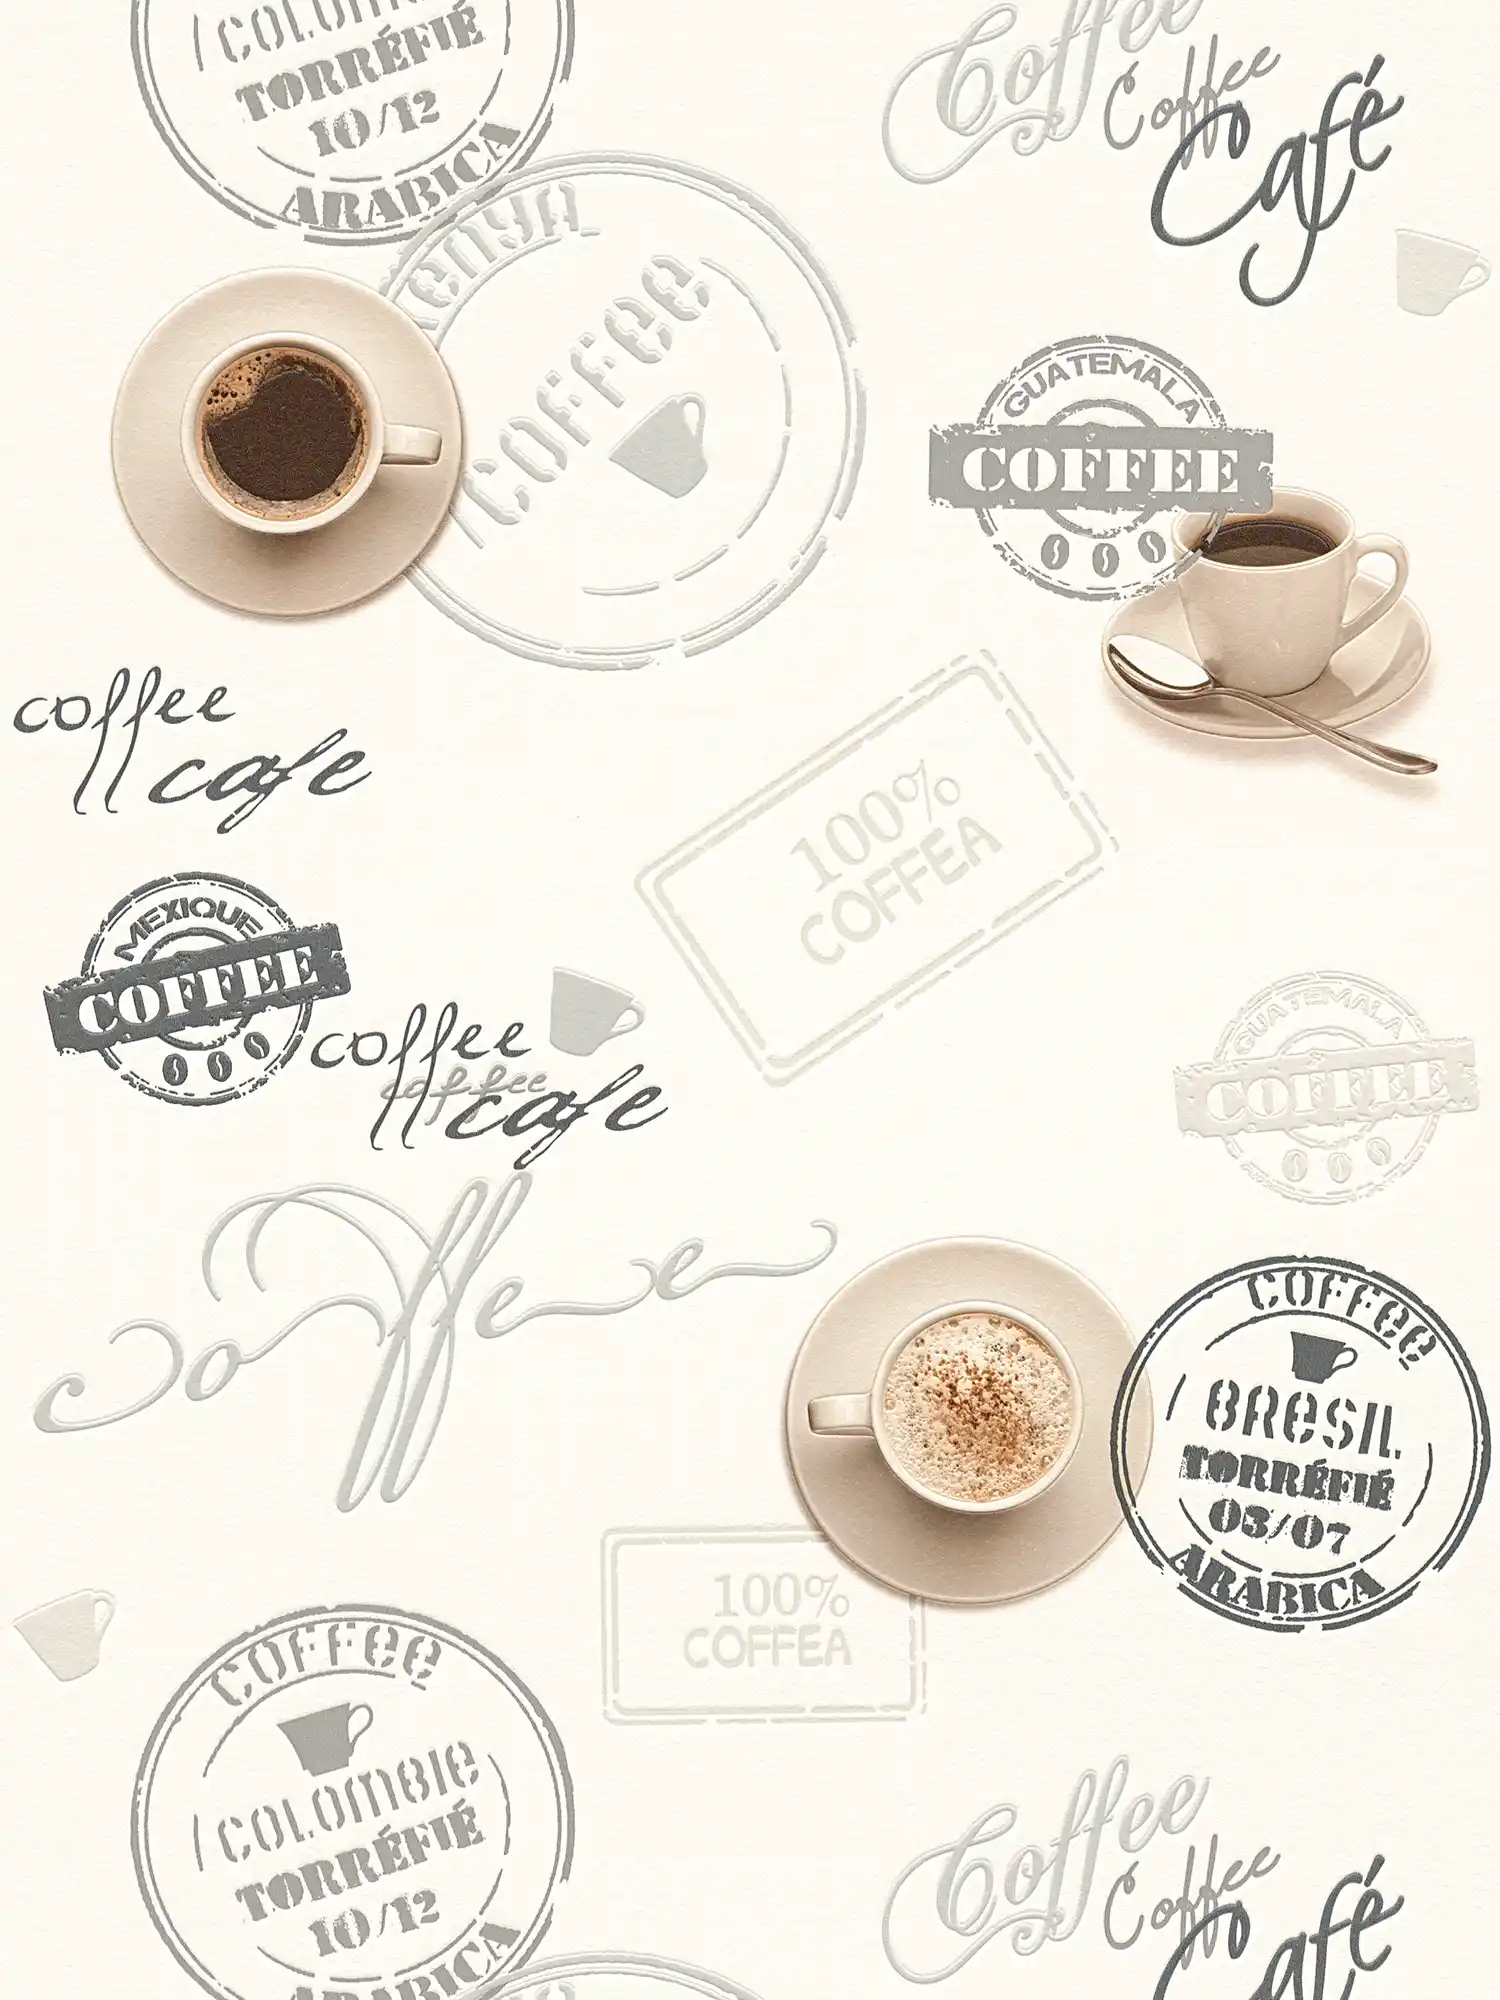 Coffee wallpaper for kitchens, retro design - cream, beige
